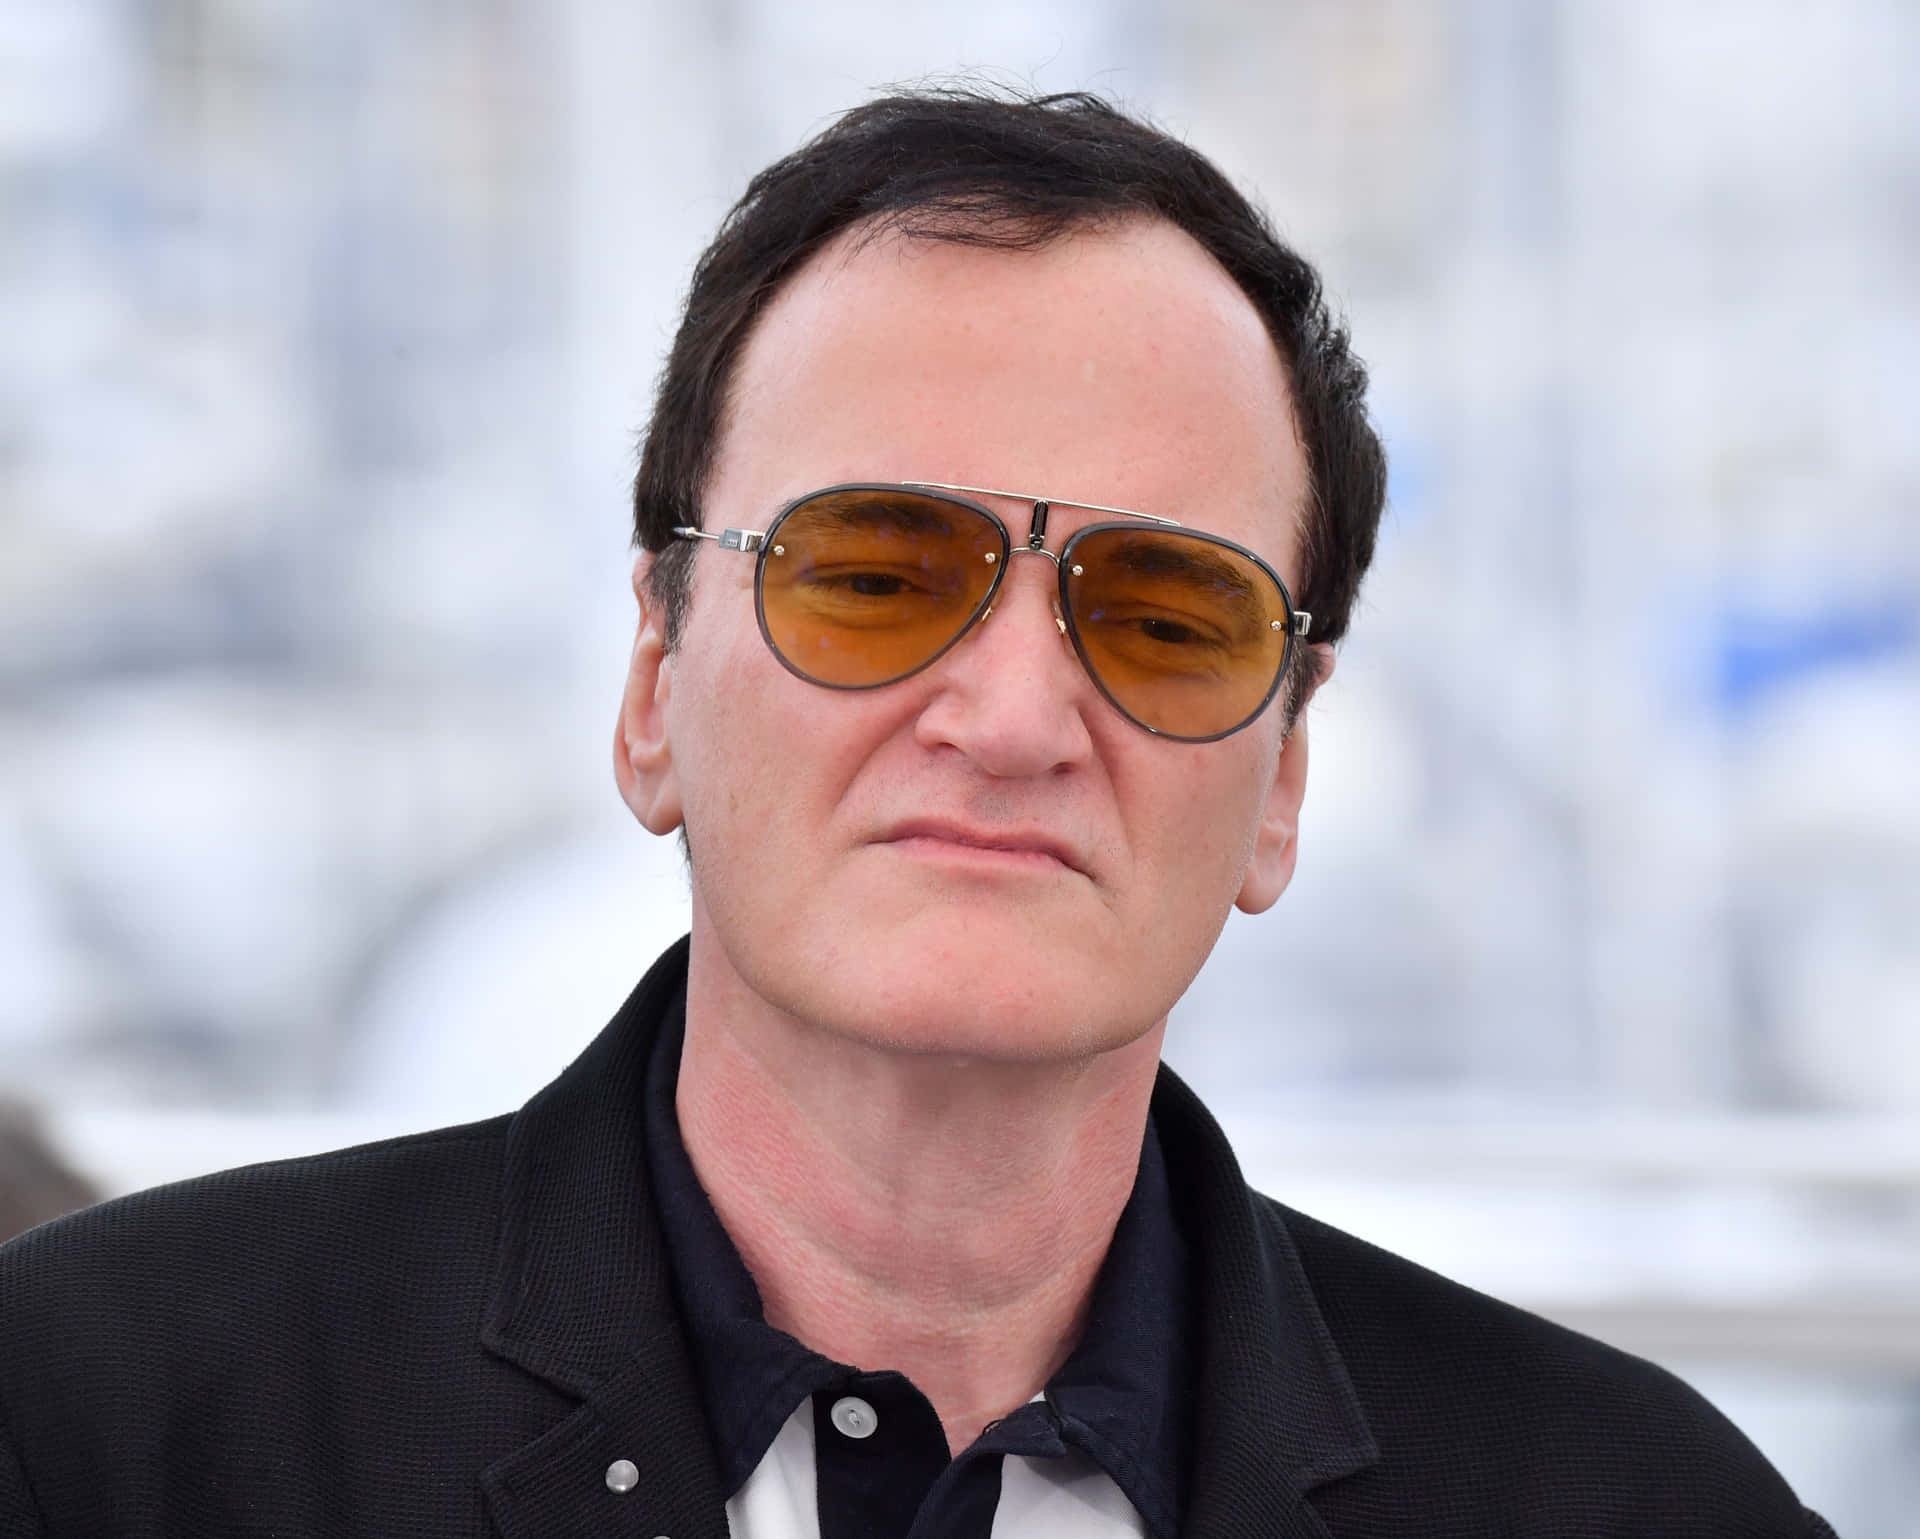 Quentin Tarantino Sunglasses Portrait Wallpaper